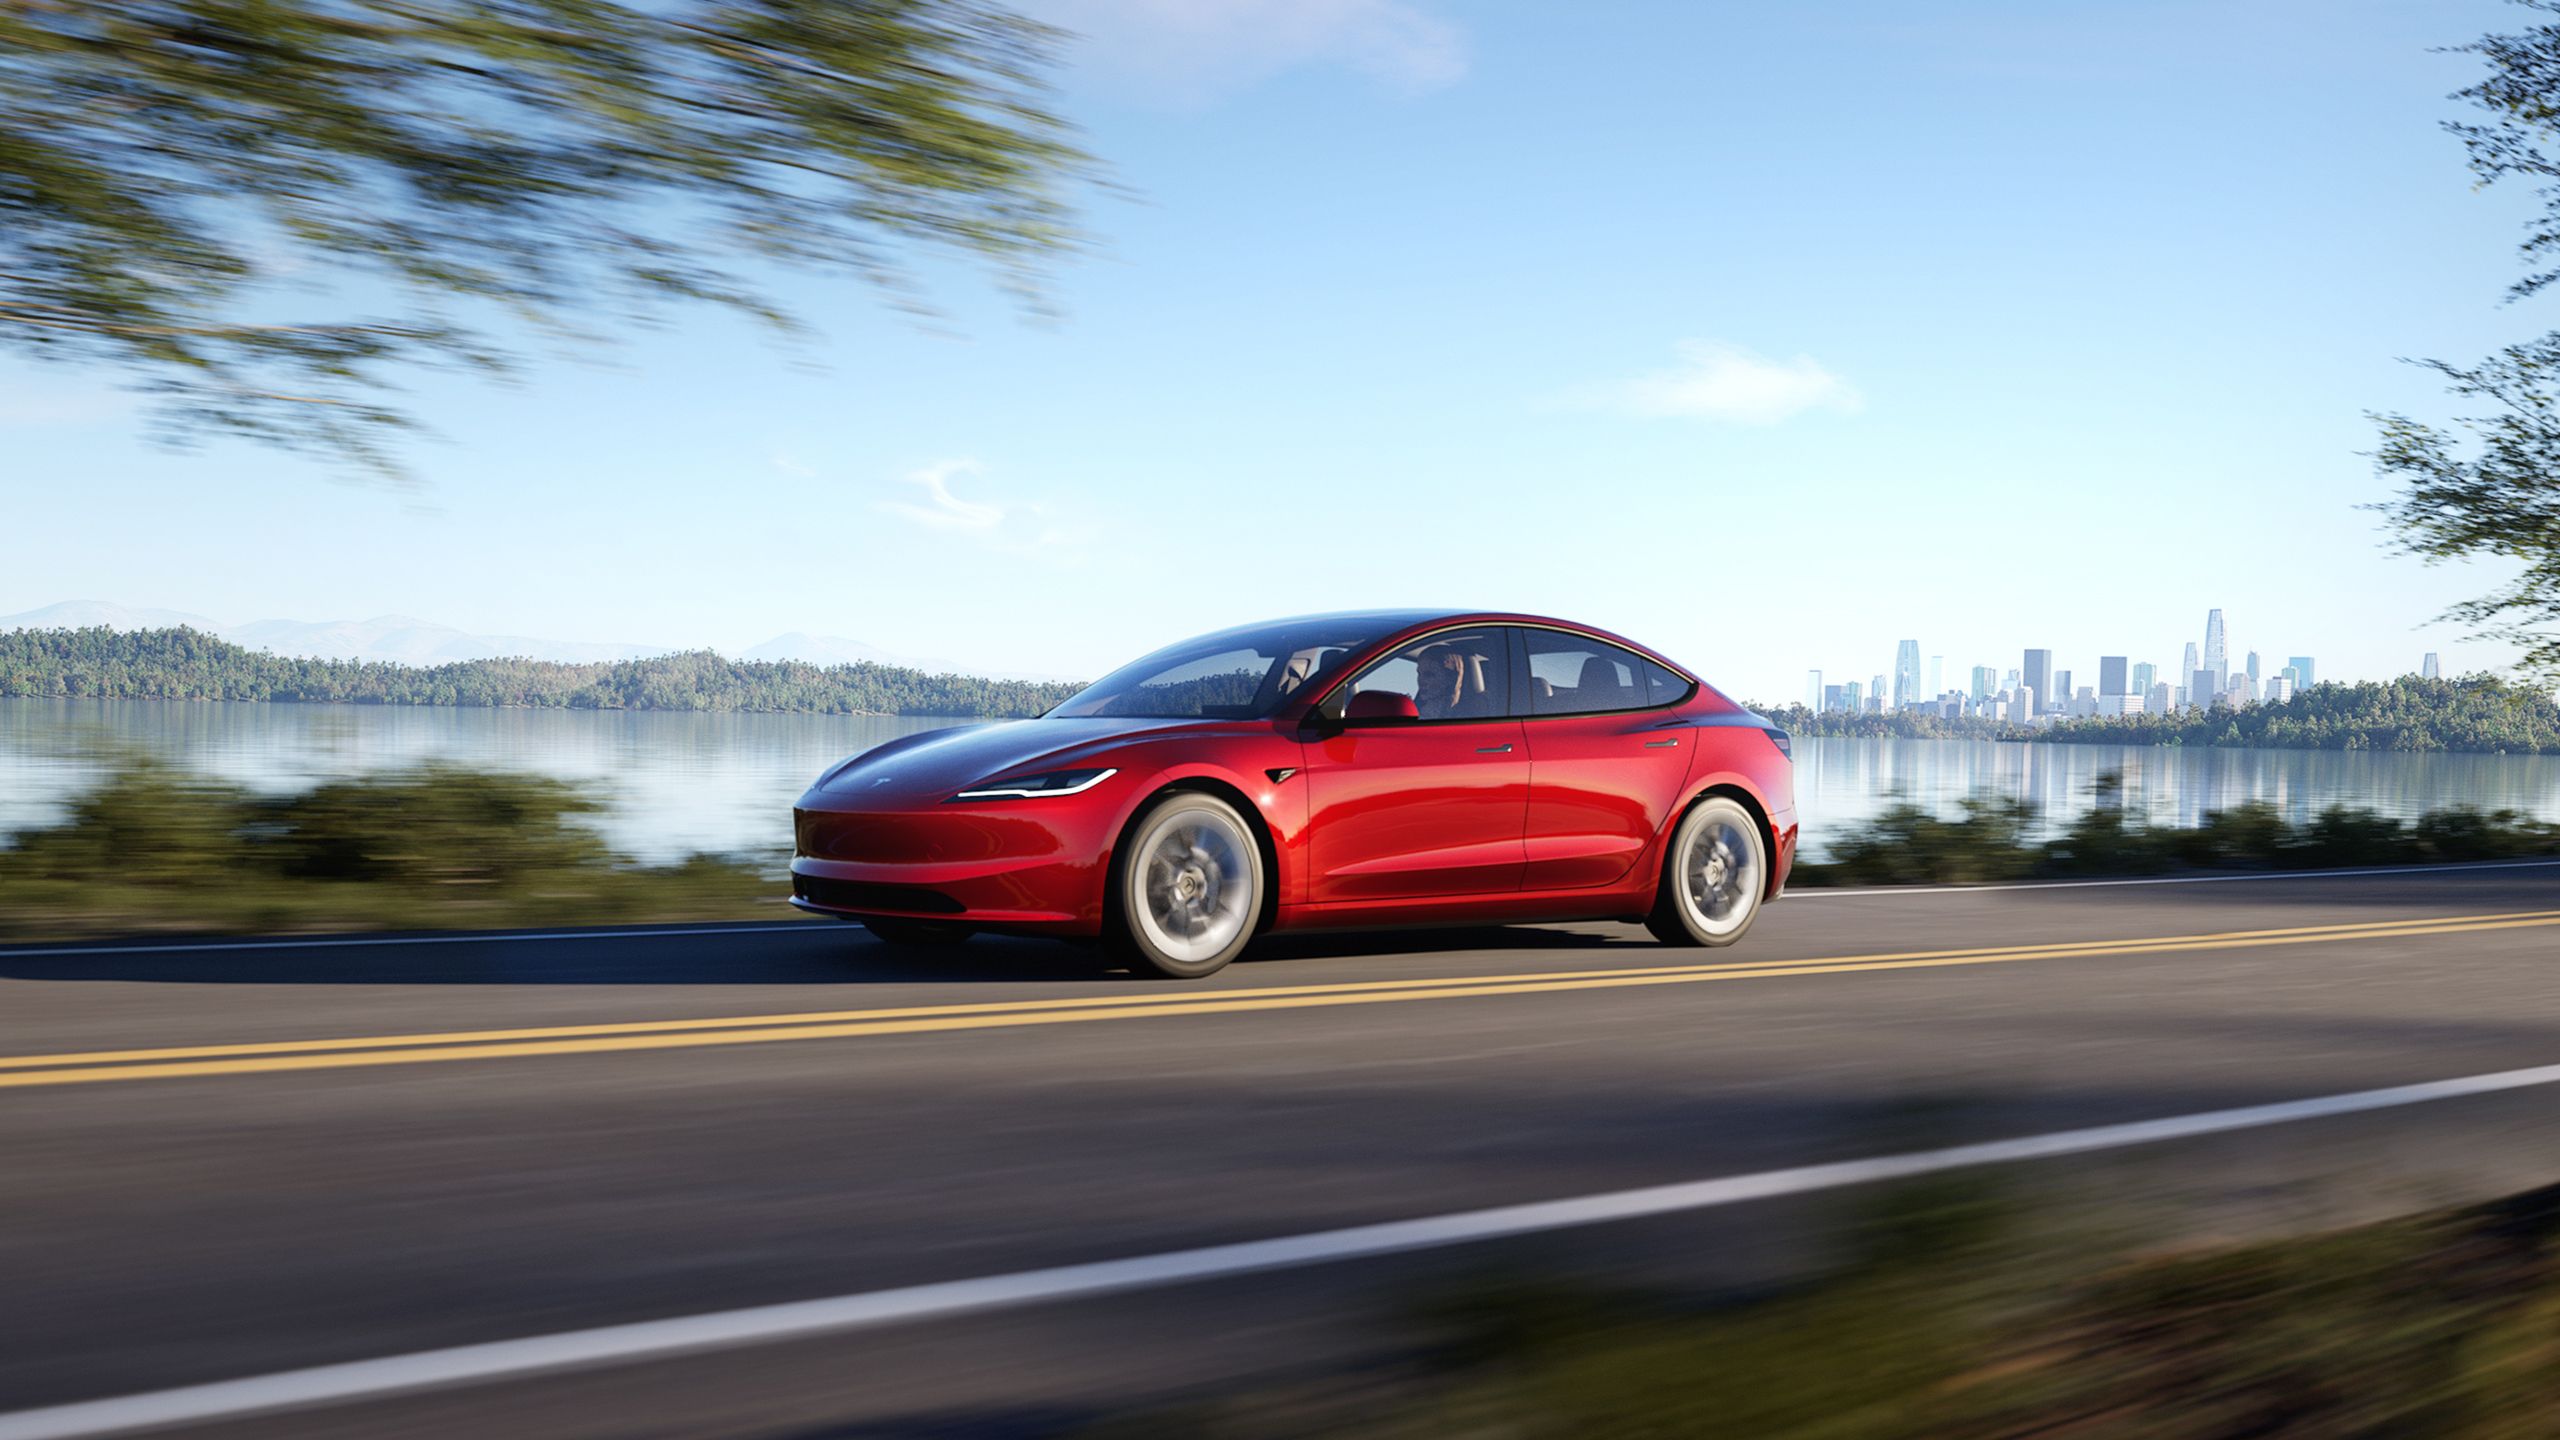 Tesla is still building a "more affordable" car